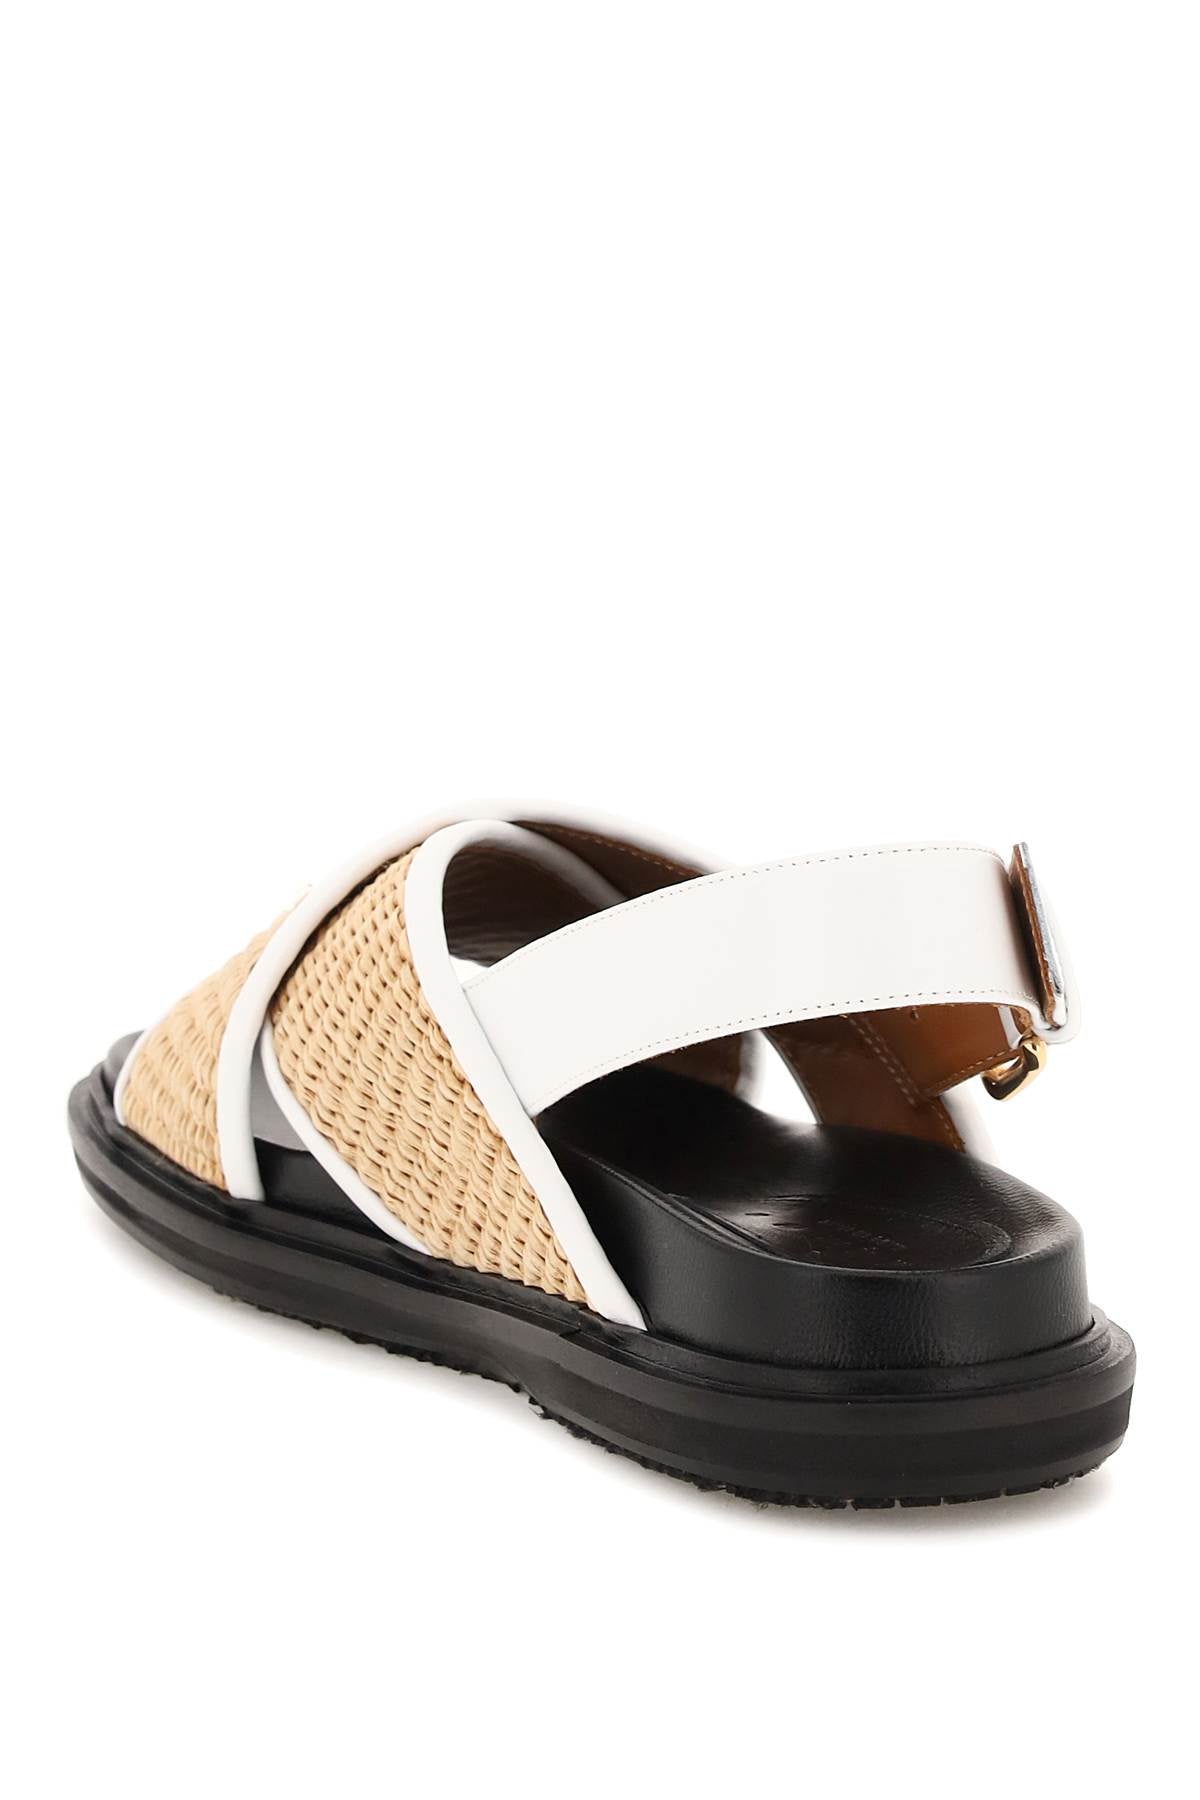 Marni leather and raffia fussbett sandals-2